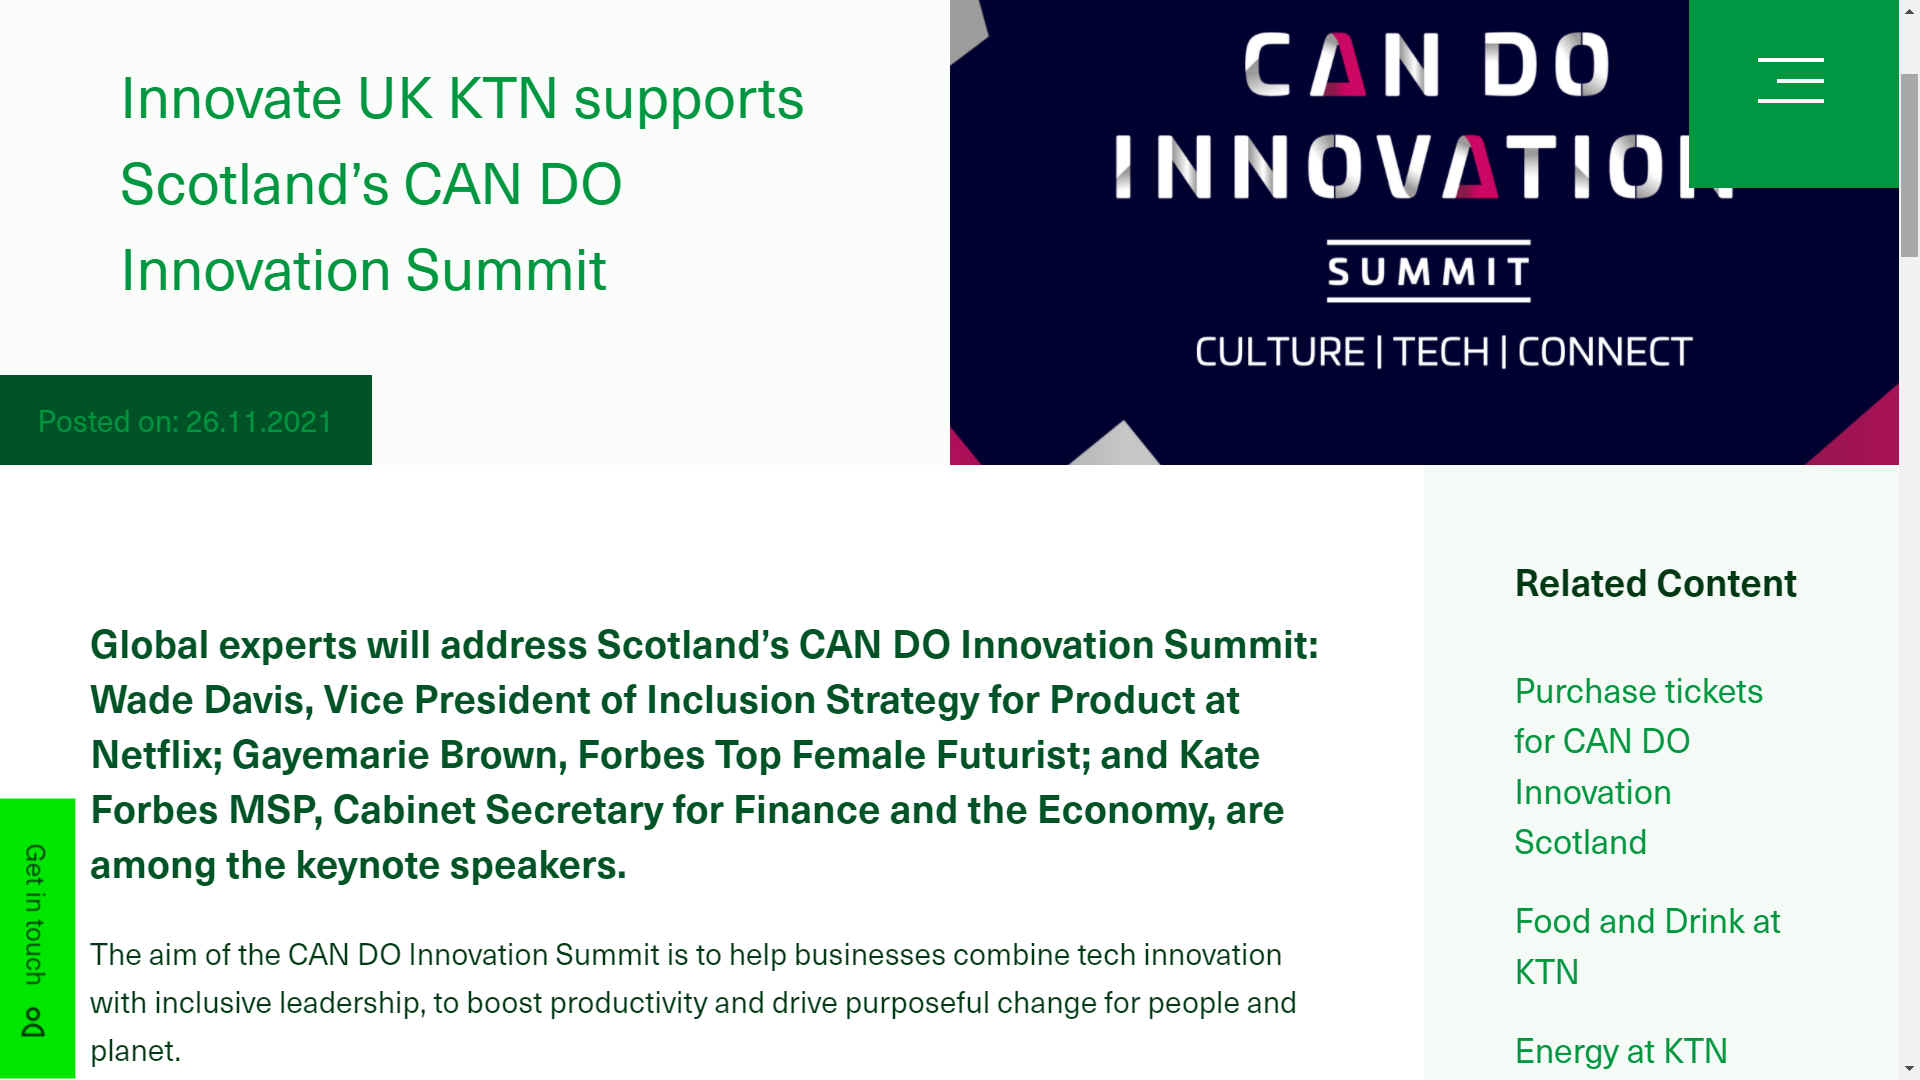 Scotland's can do innovation summit technology connect UK KTN